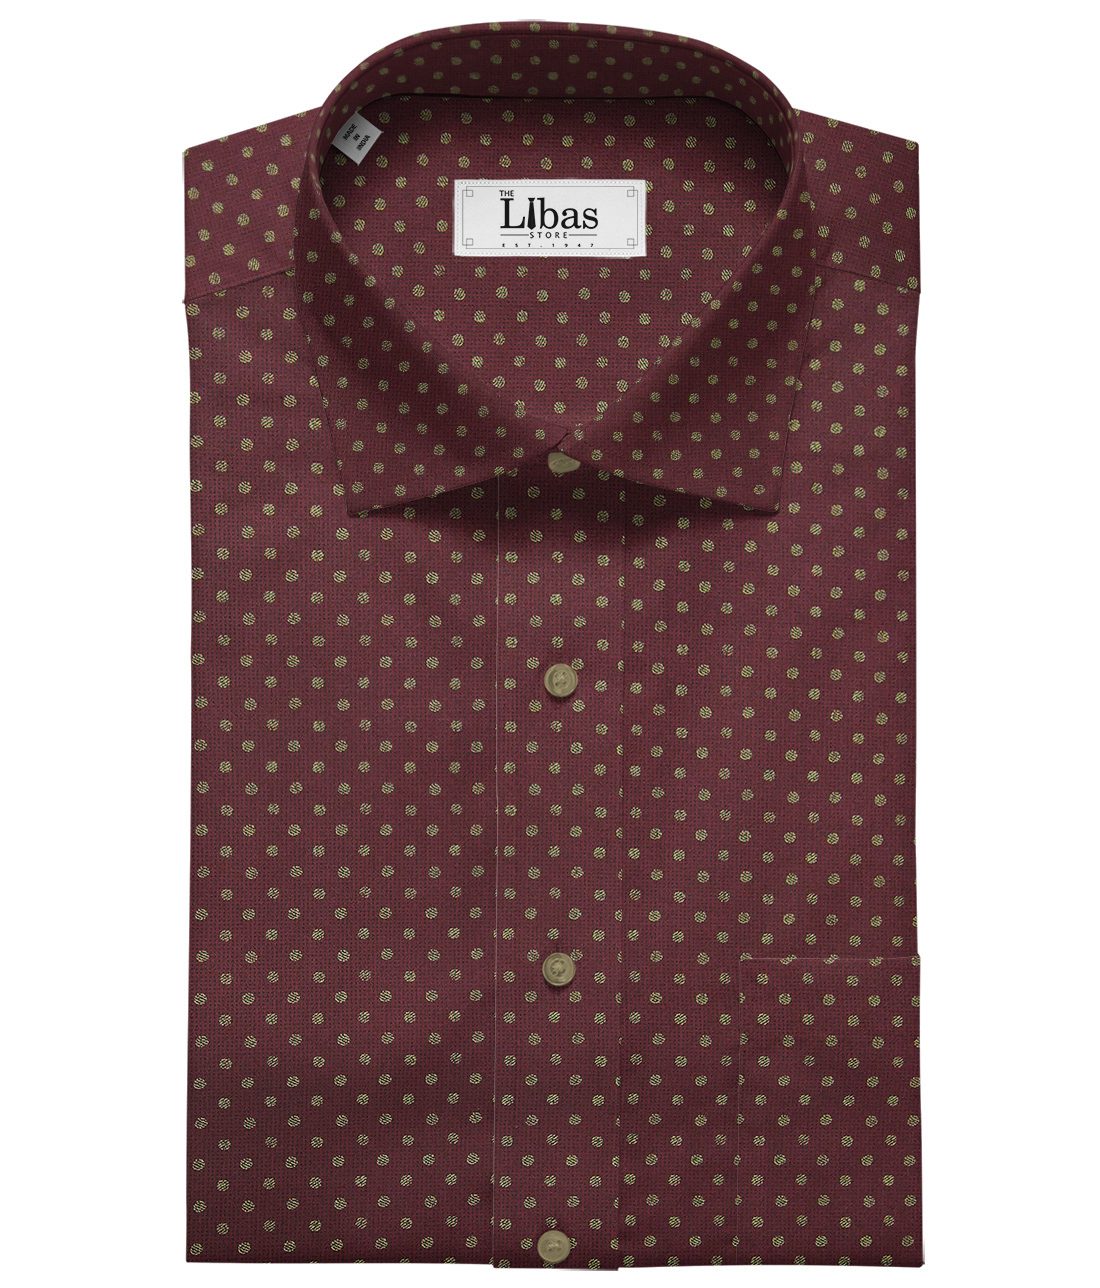 Exquisite Men's 100% Cotton Beige Polka Dots Print Unstitched Shirt ...